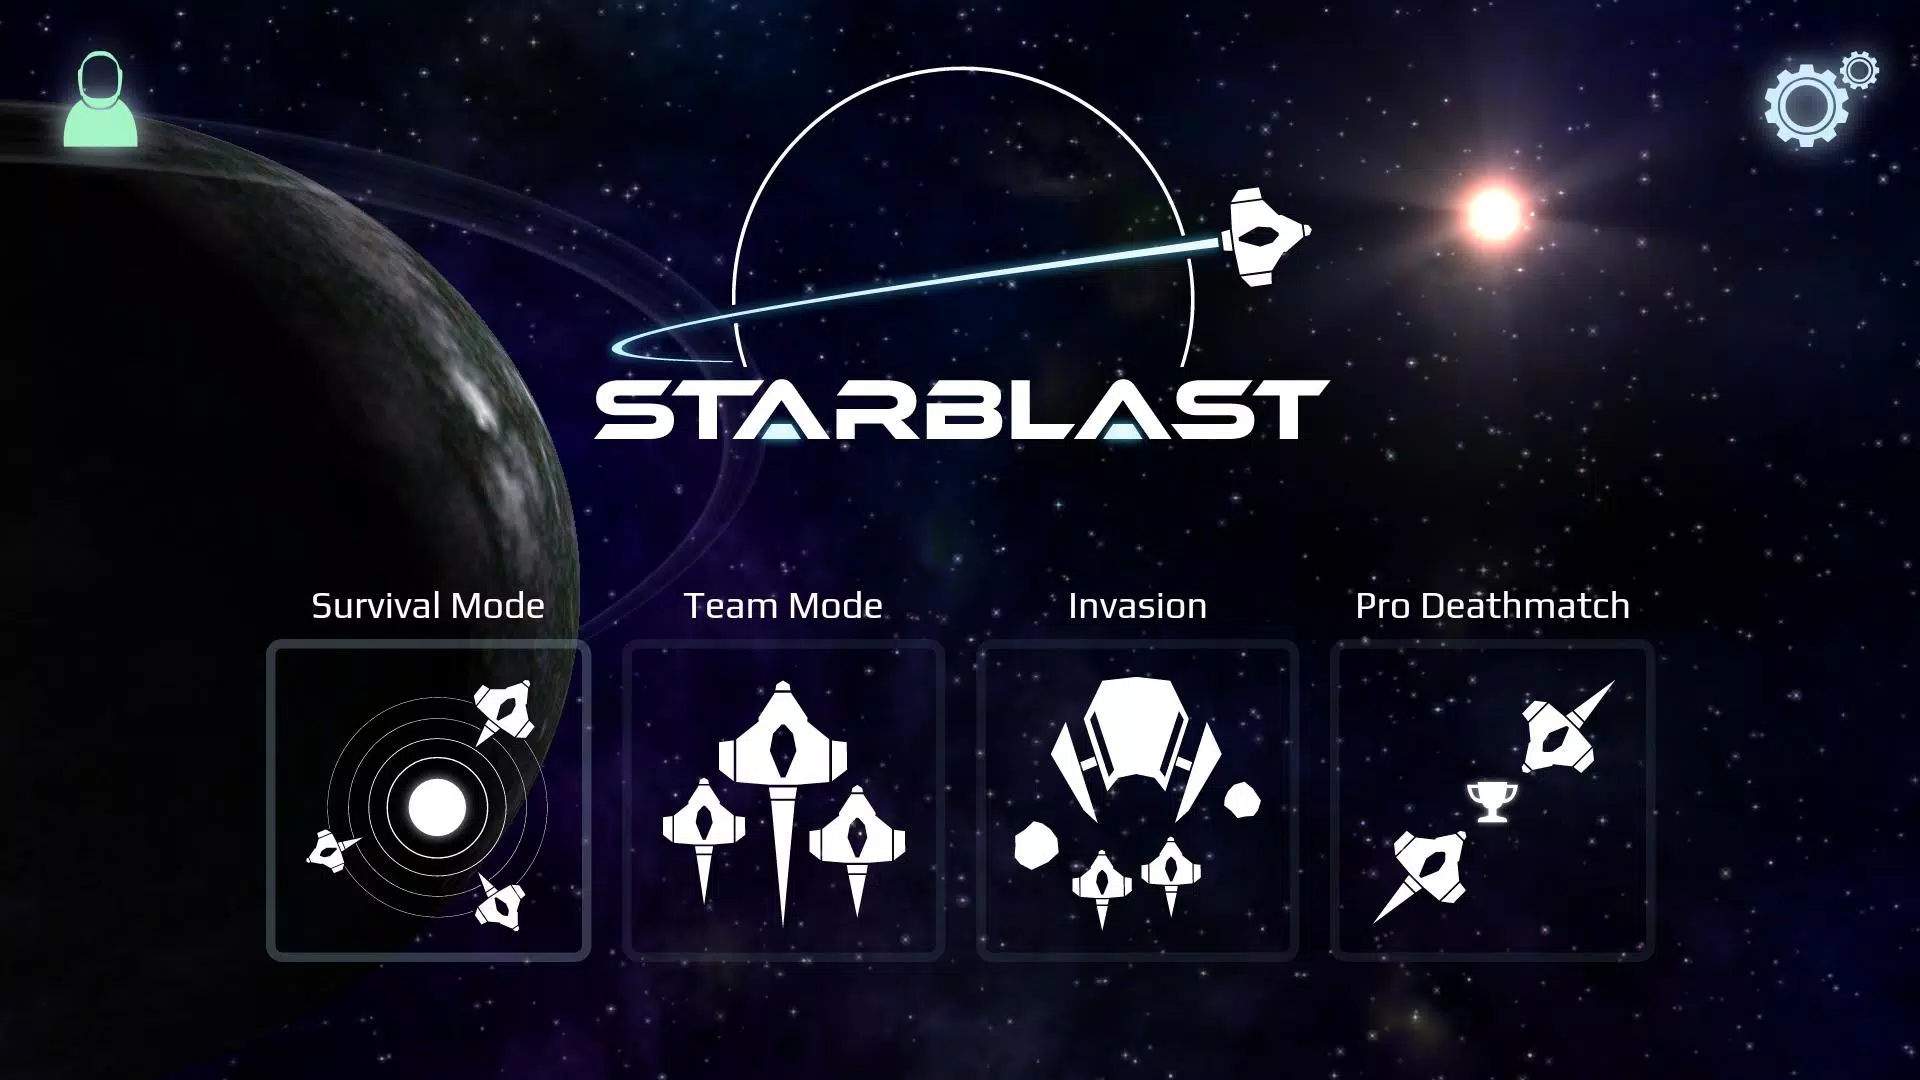 Starblast.io İndir - Ücretsiz Oyun İndir ve Oyna! - Tamindir